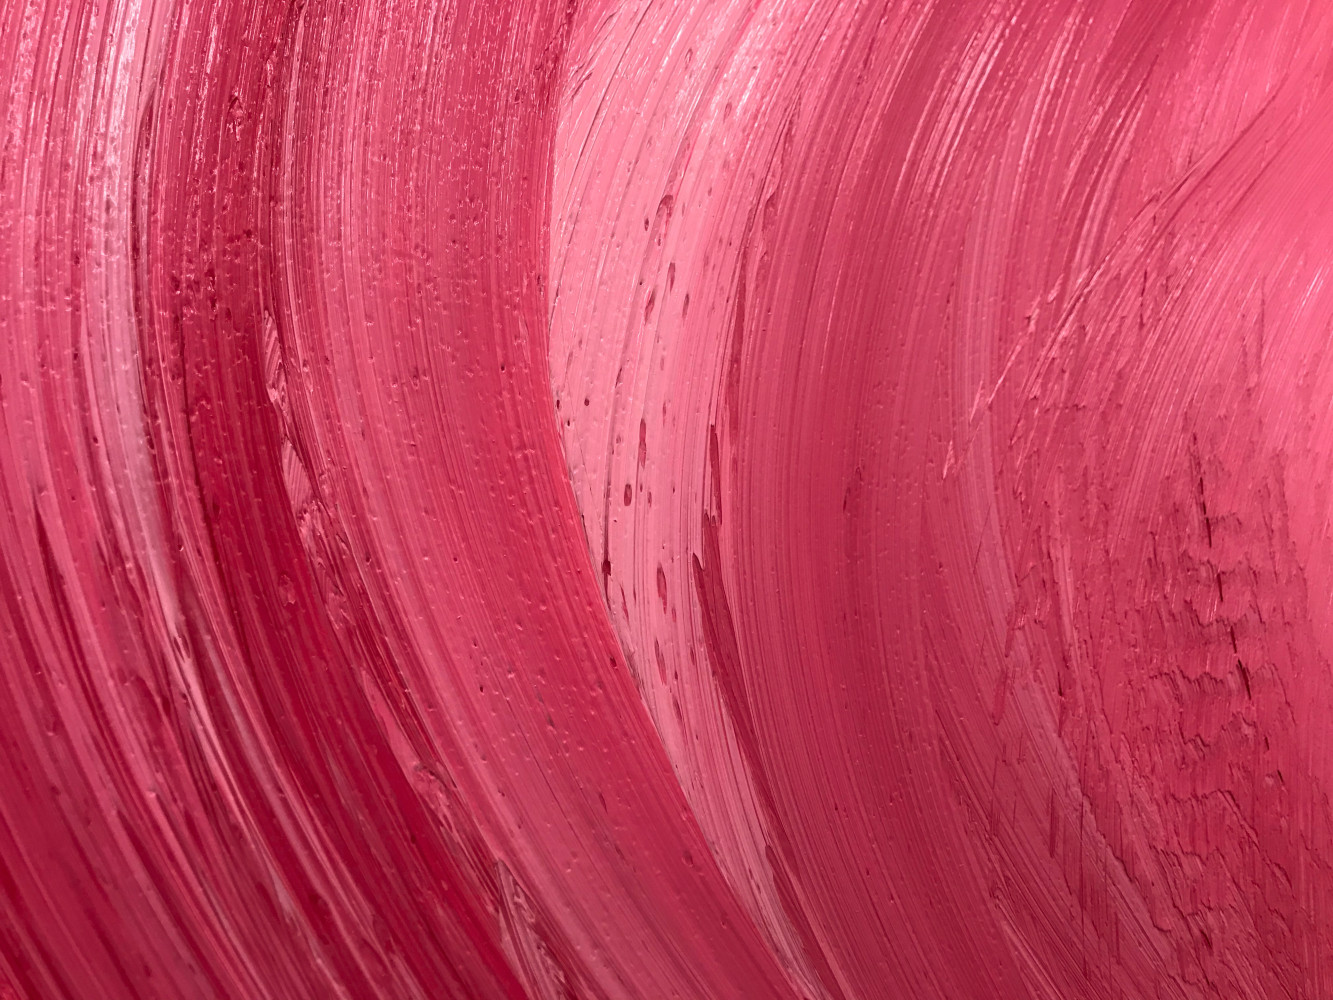 Jason Martin, ‘Untitled (Brilliant pink / Mixed white) (detail)’, 2020